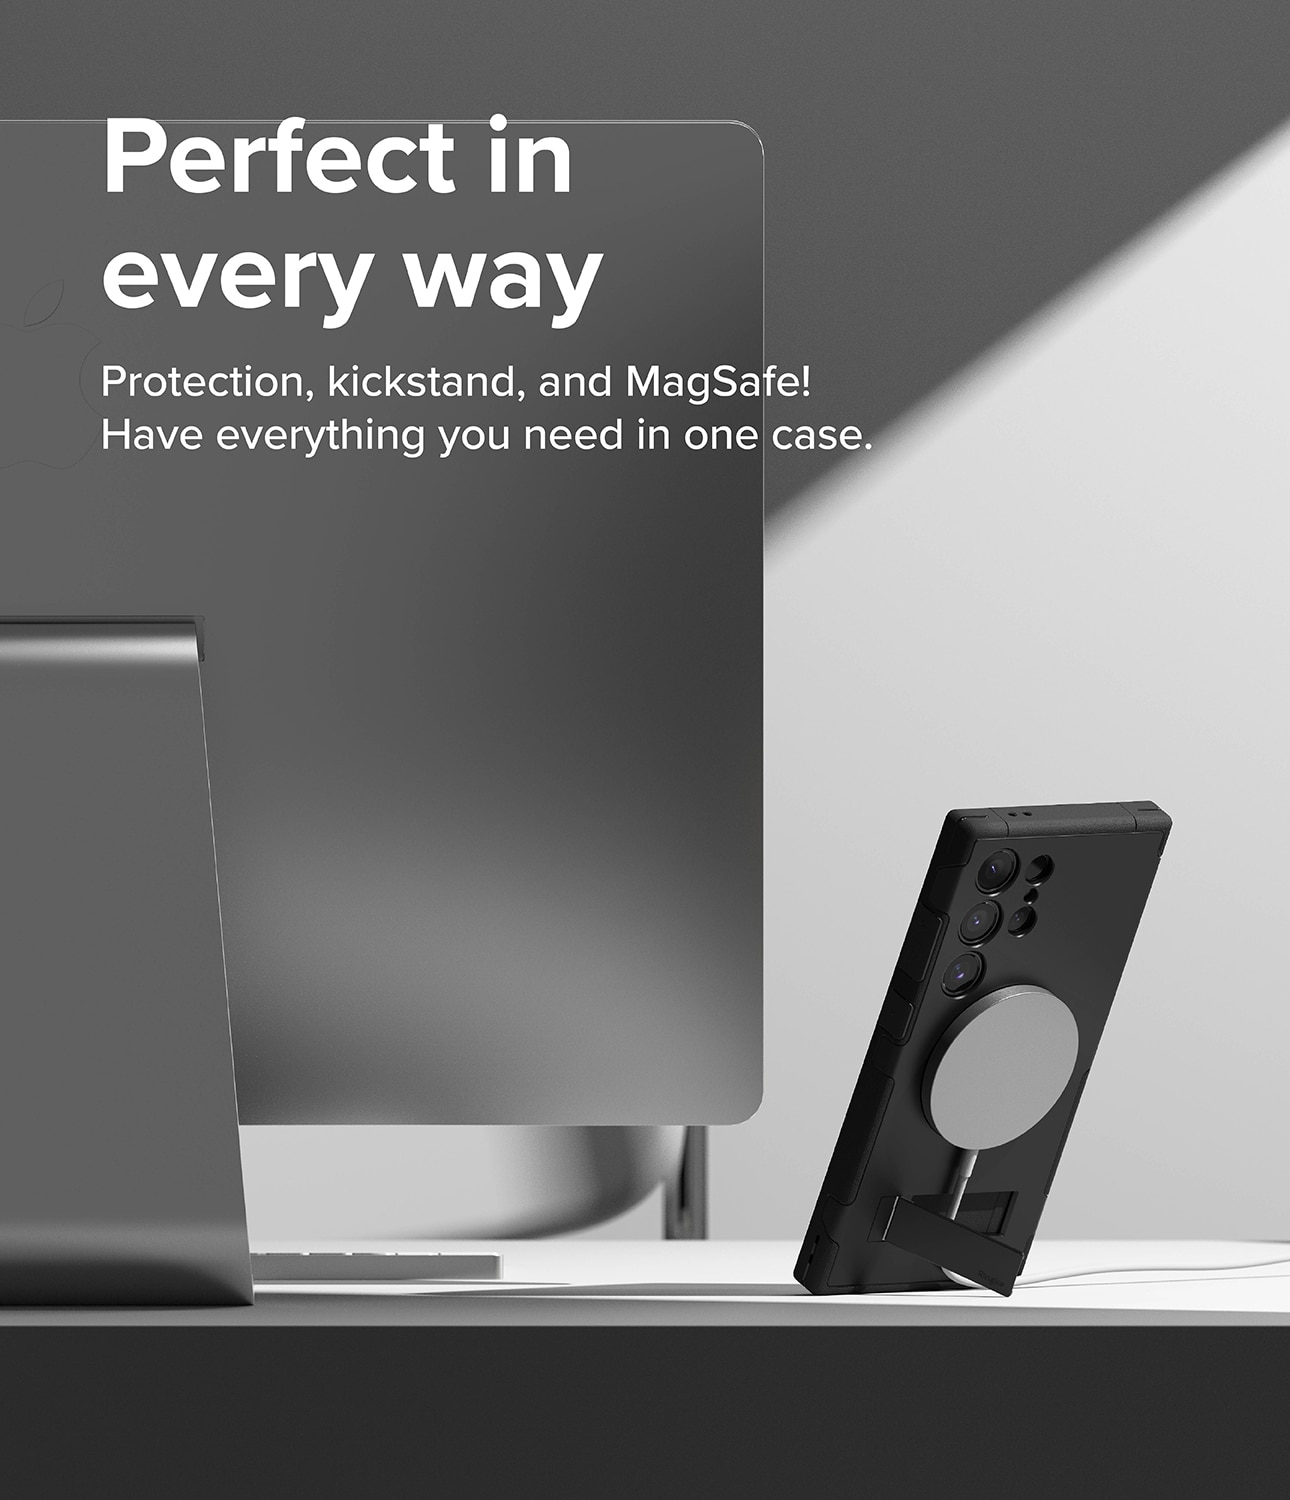 Alles Magnetic Case Samsung Galaxy S24 Ultra schwarz